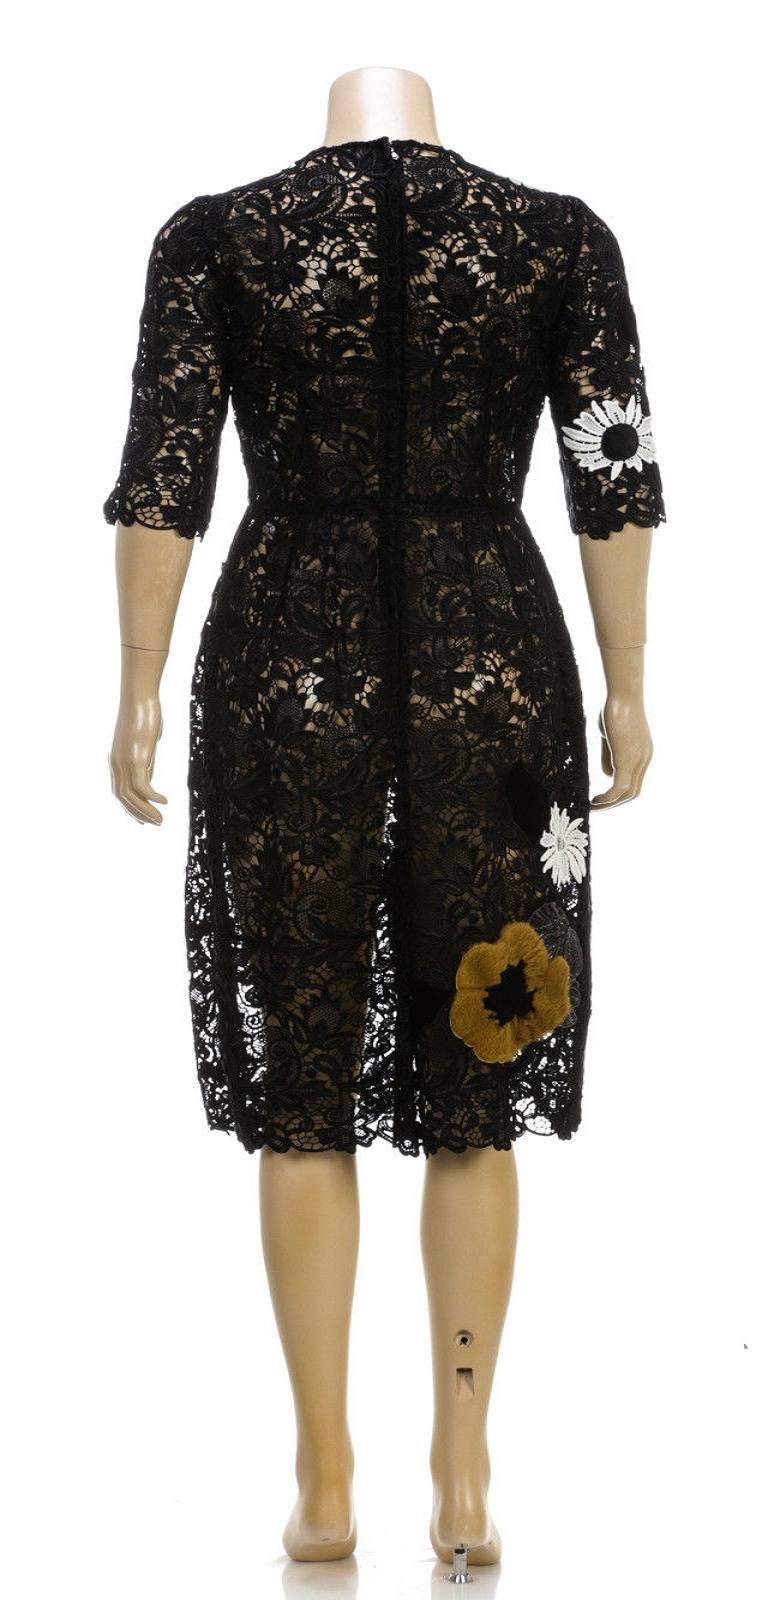 Dolce & Gabbana Black Half Sleeve Macrame Floral Applique Dress AW 14 (Size 40) For Sale 1